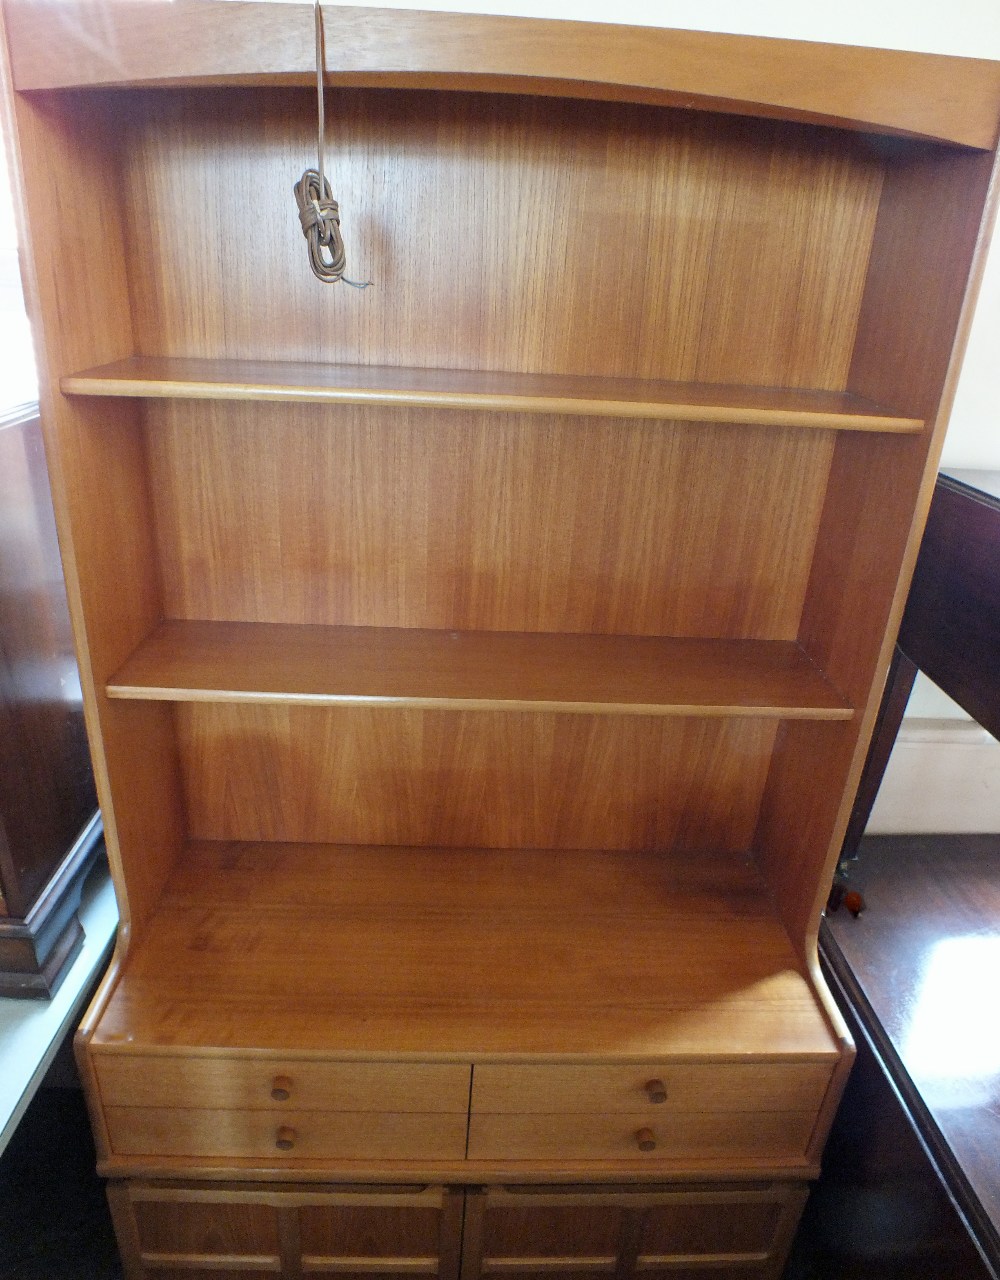 A modern shelf back dresser